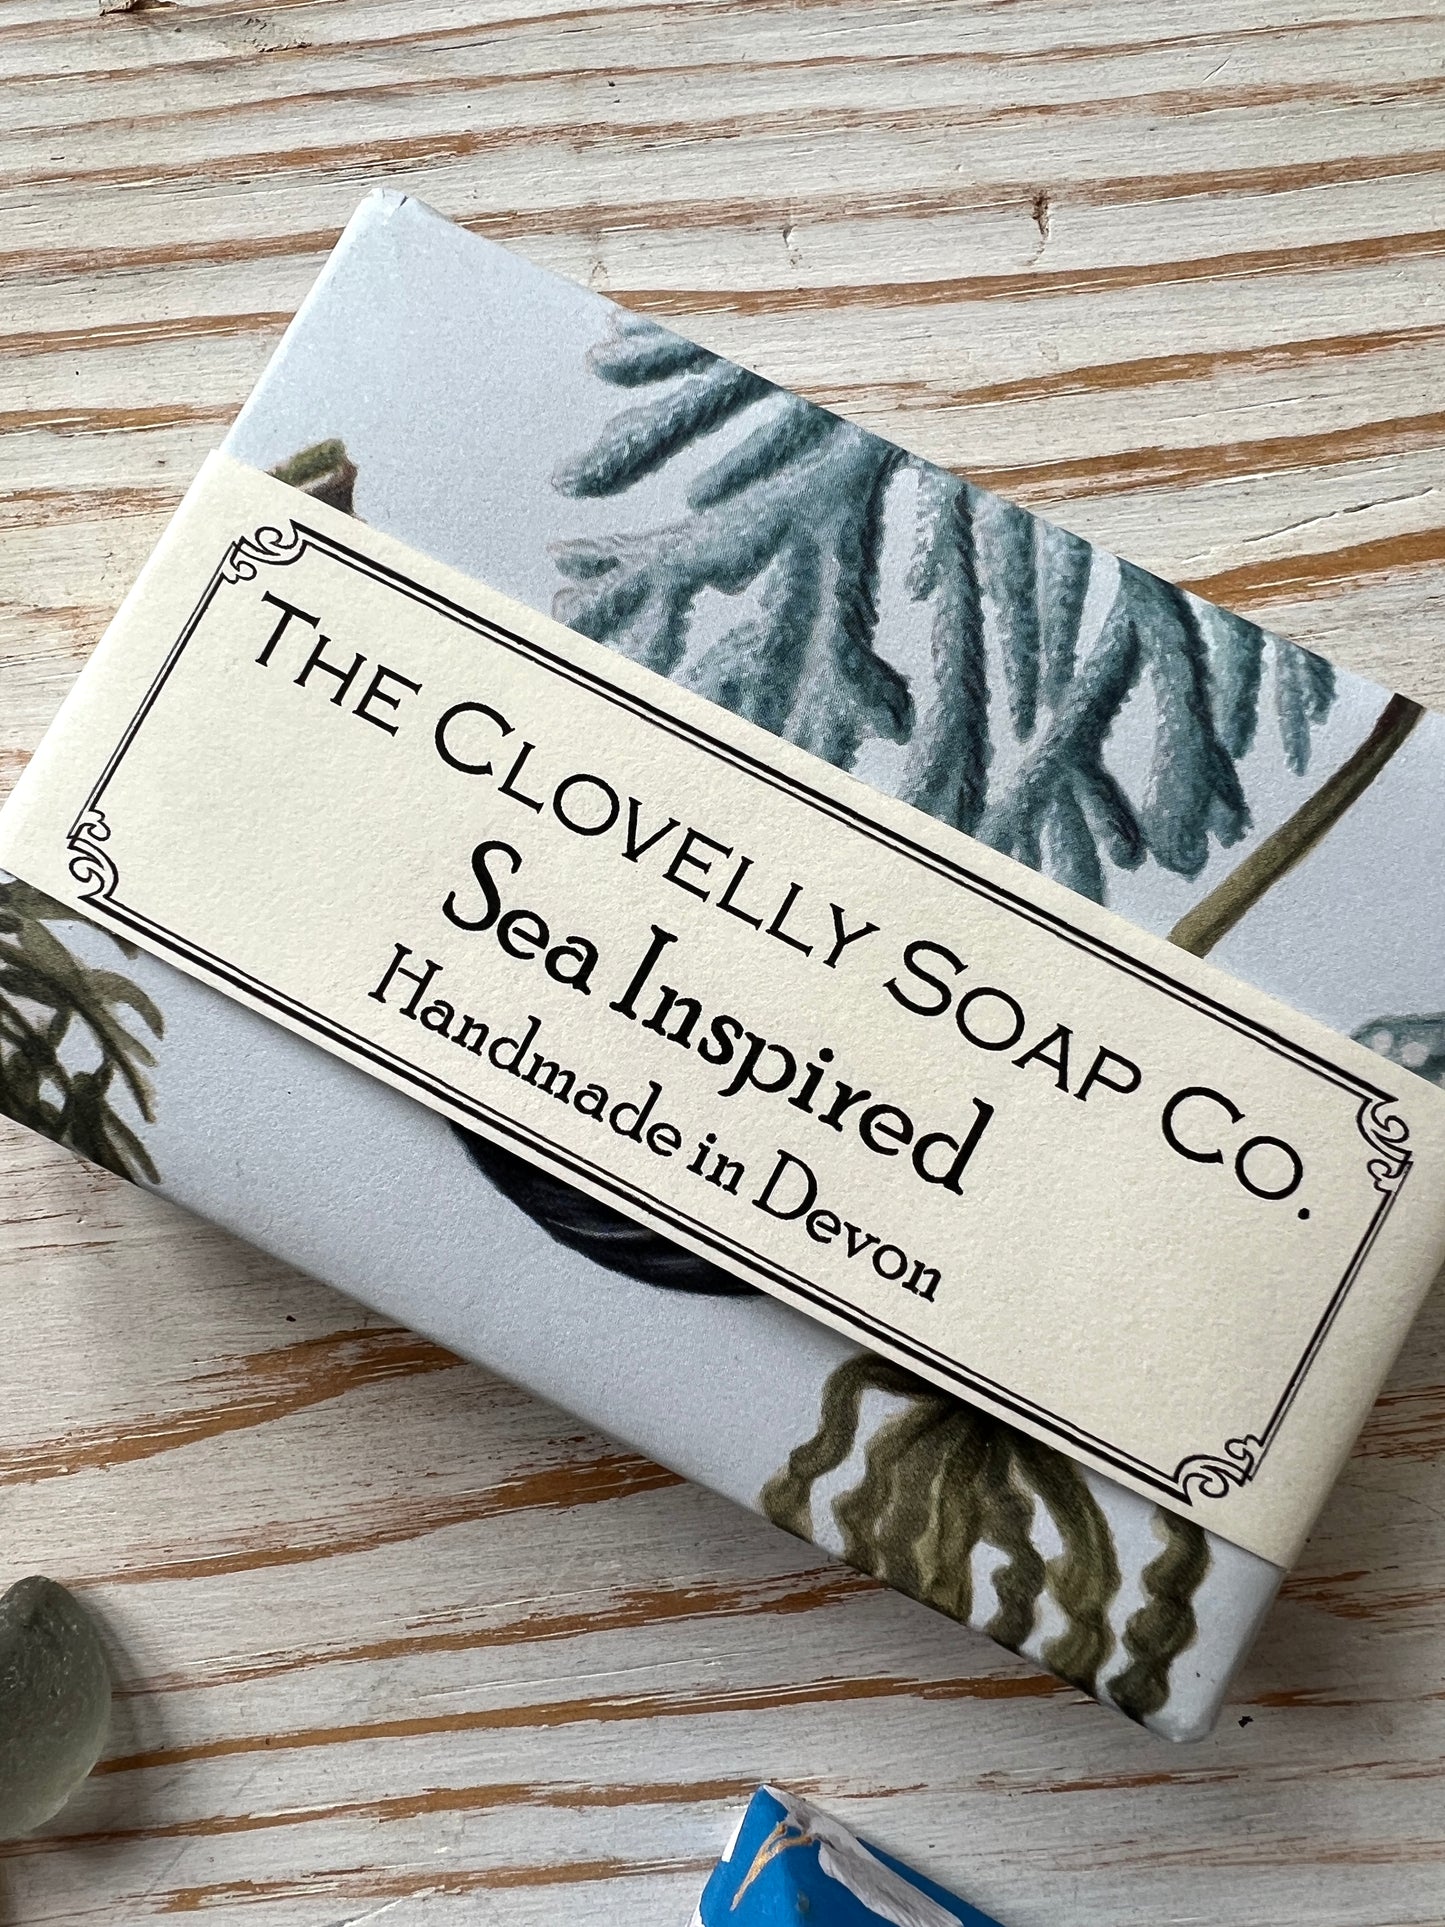 Sea Inspired handmade wrapped artisan soap from Devon